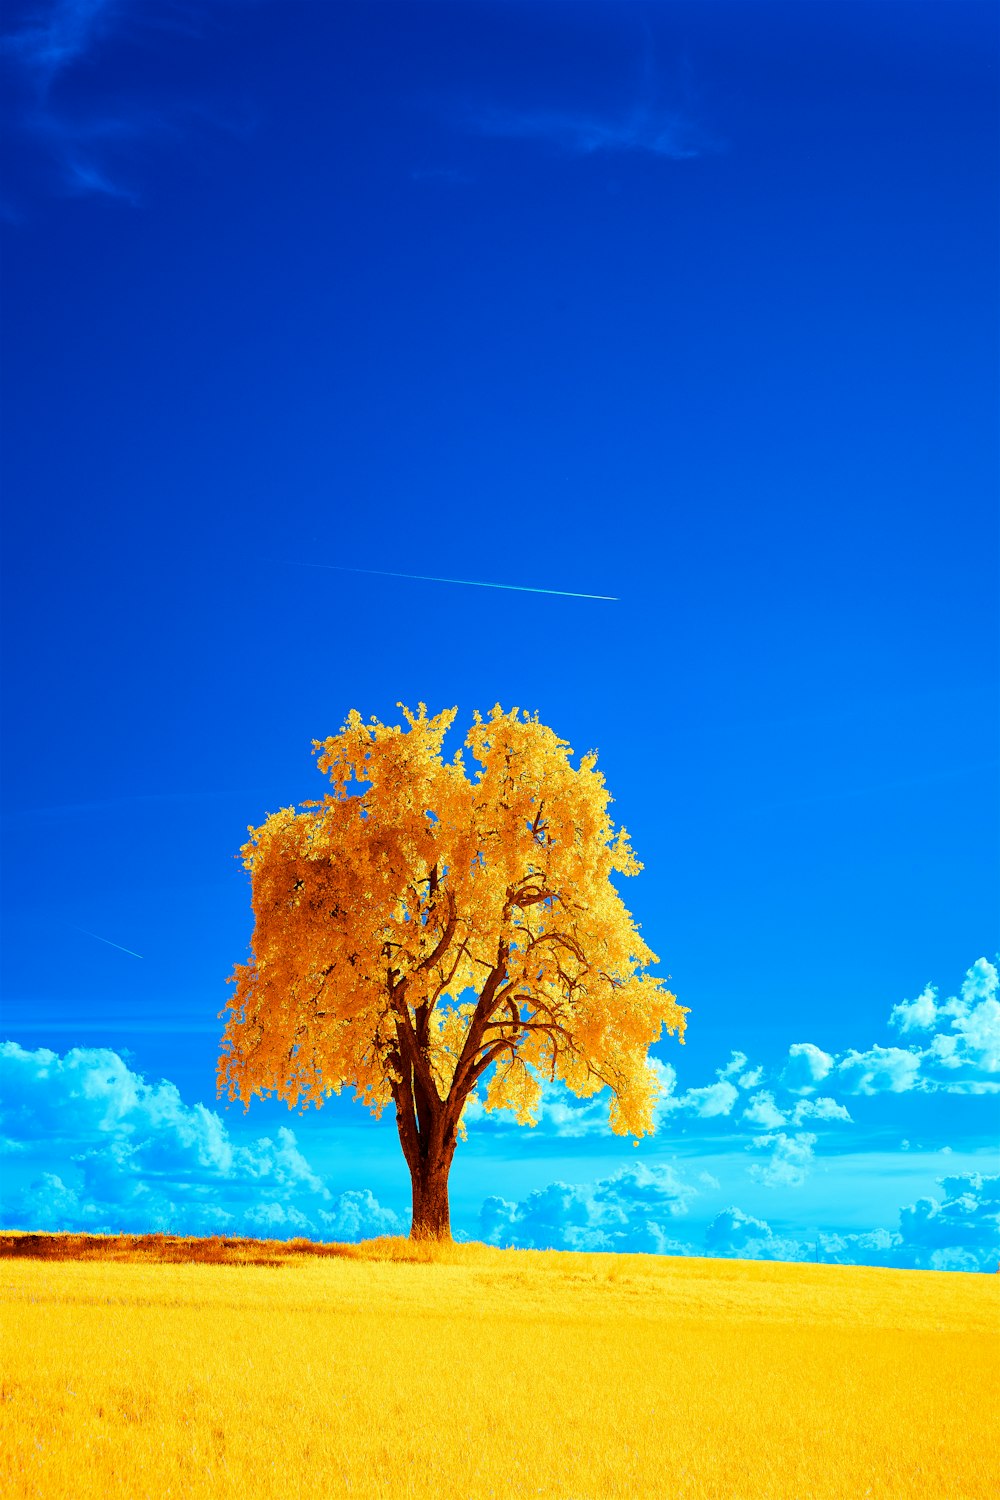 yellow leaf tree under blue sky during daytime photo – Free Tree Image on  Unsplash